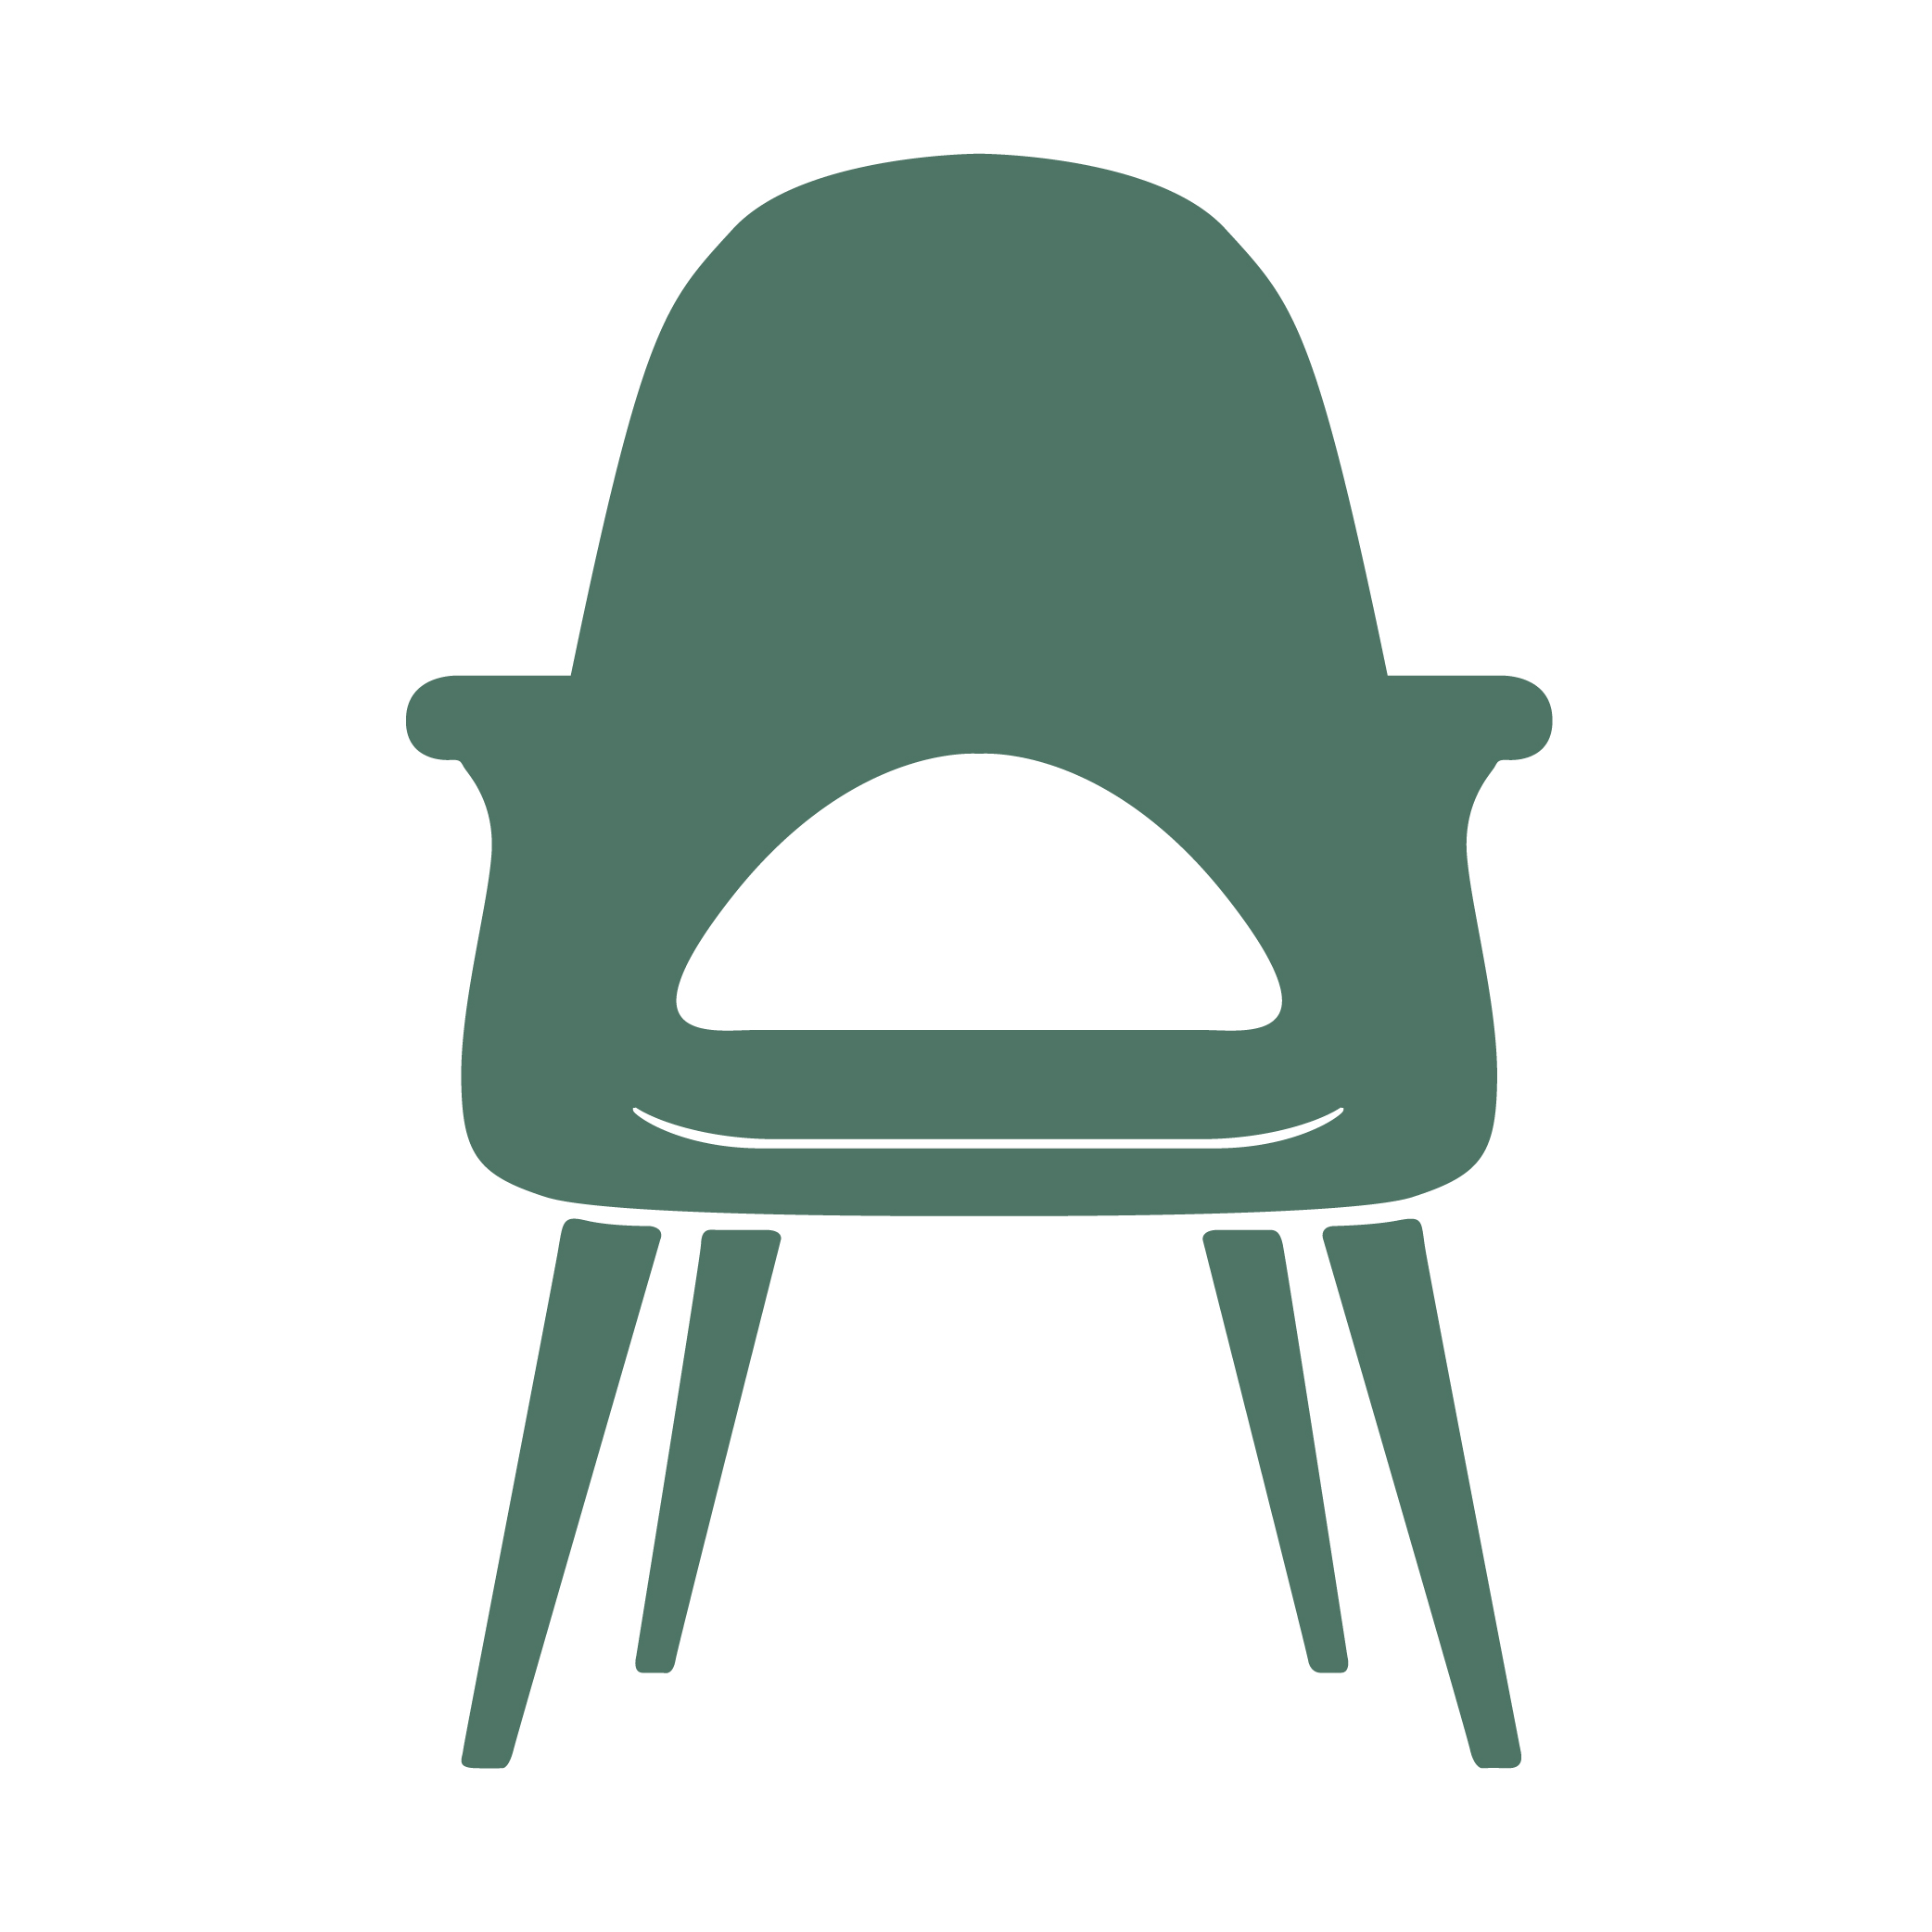 Artisan Side Chair (Brown Faux)